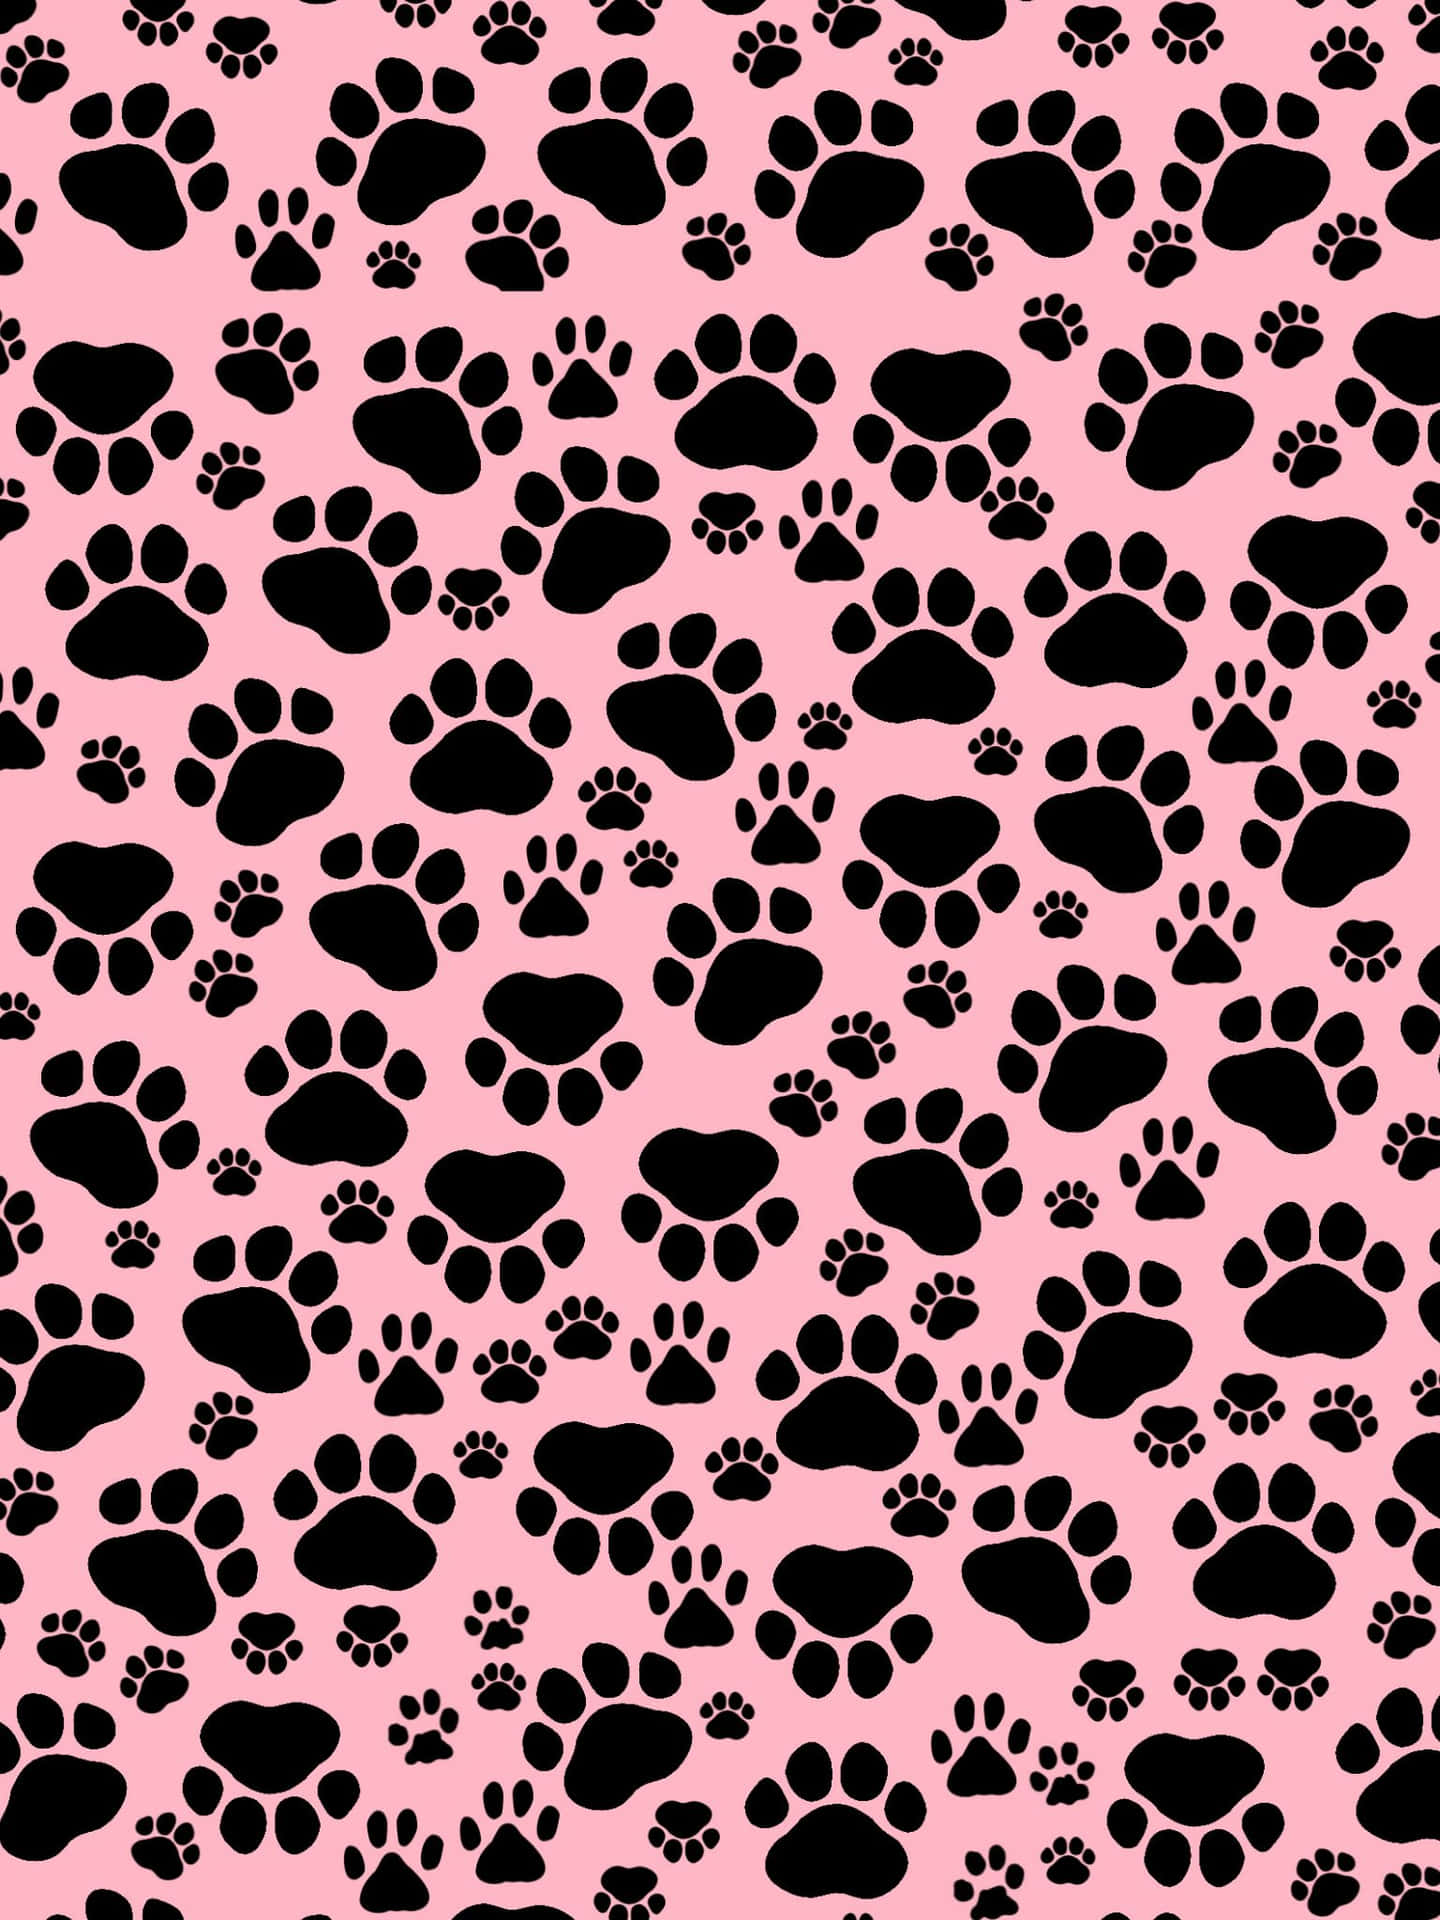 Paw Prints Digital Art Pink And Black Background